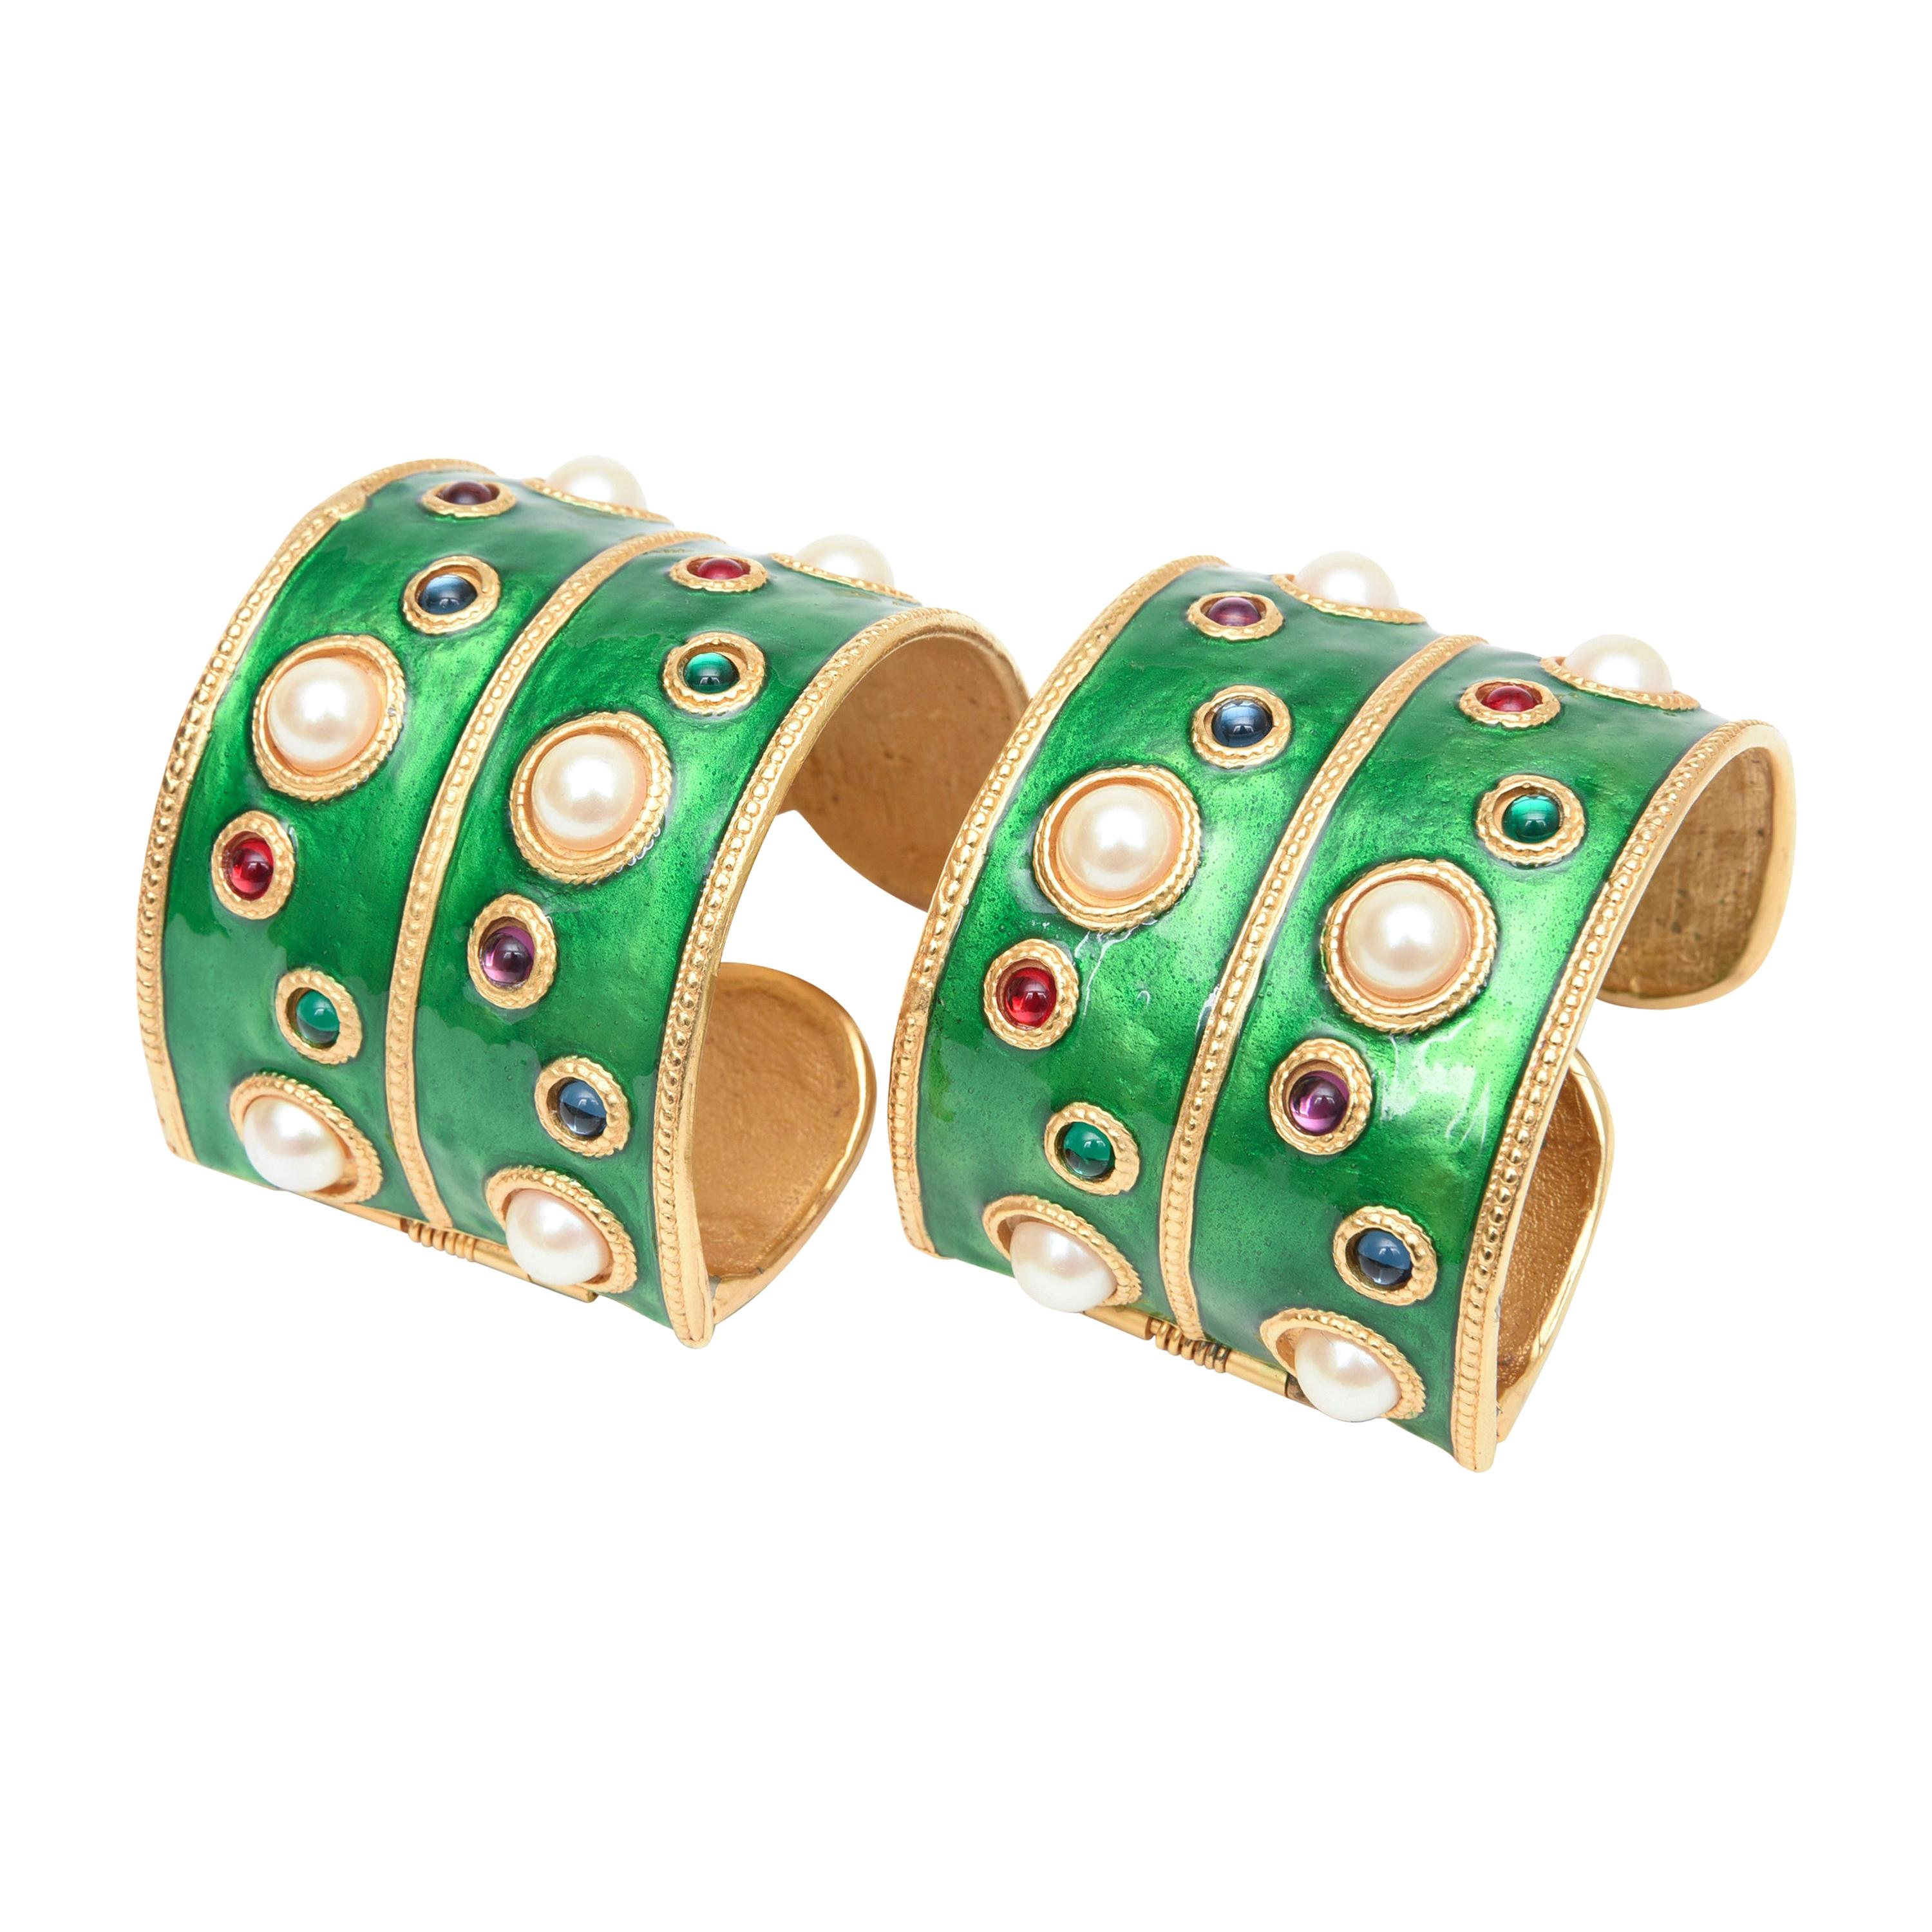  Emerald Green Enamel, Faux Pearls & Multi Colored Stones Cuff Bracelets Pair Of